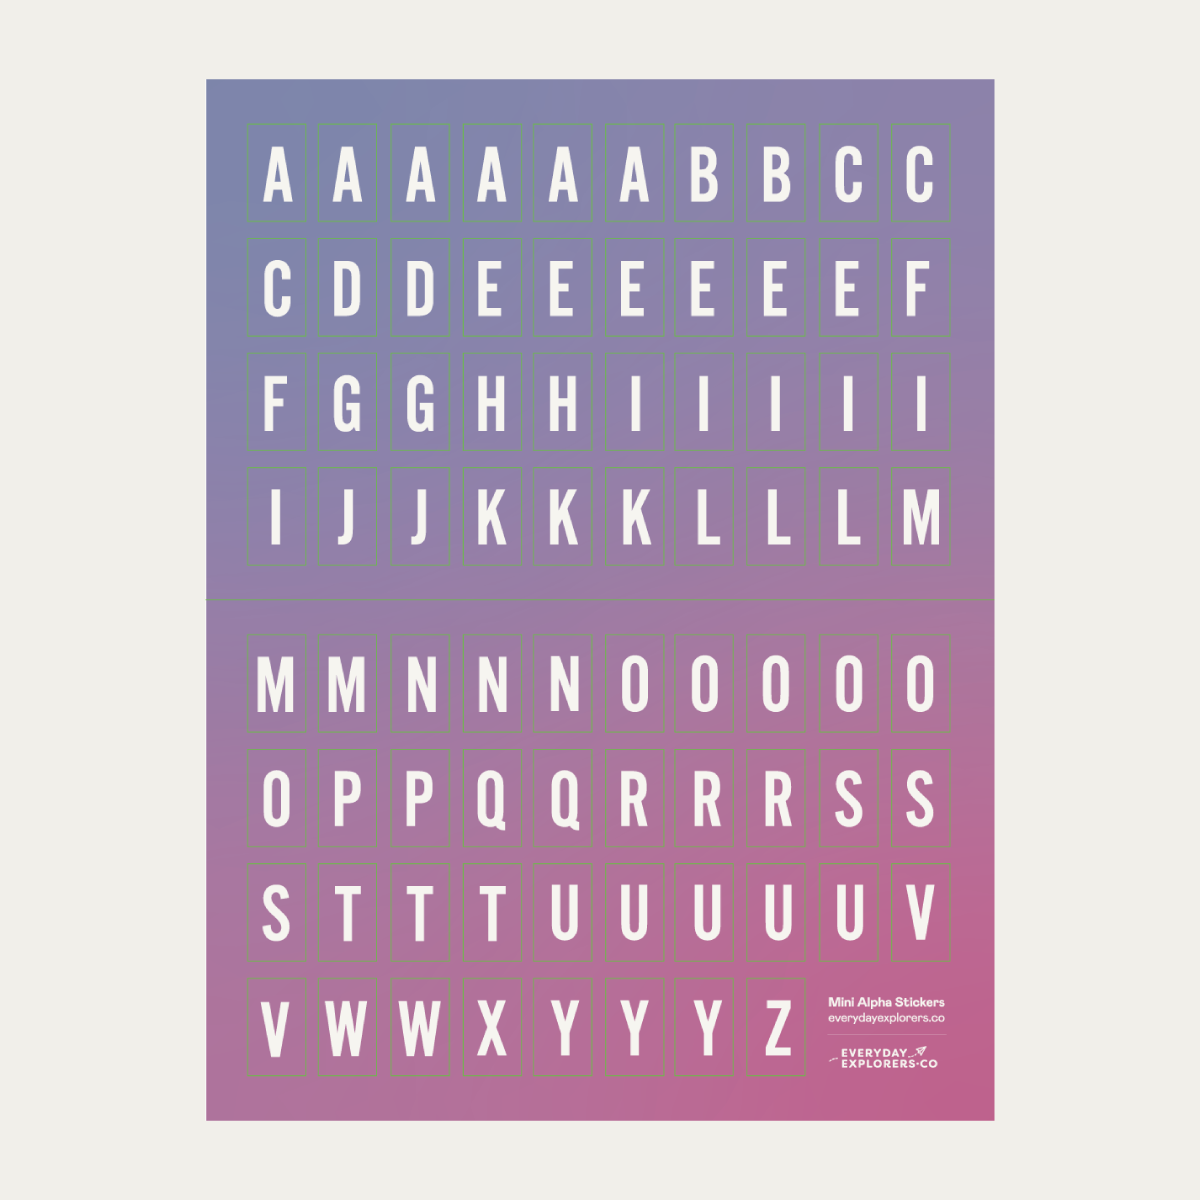 6x8 Alphabet Sticker Sheet - Sugar Rush